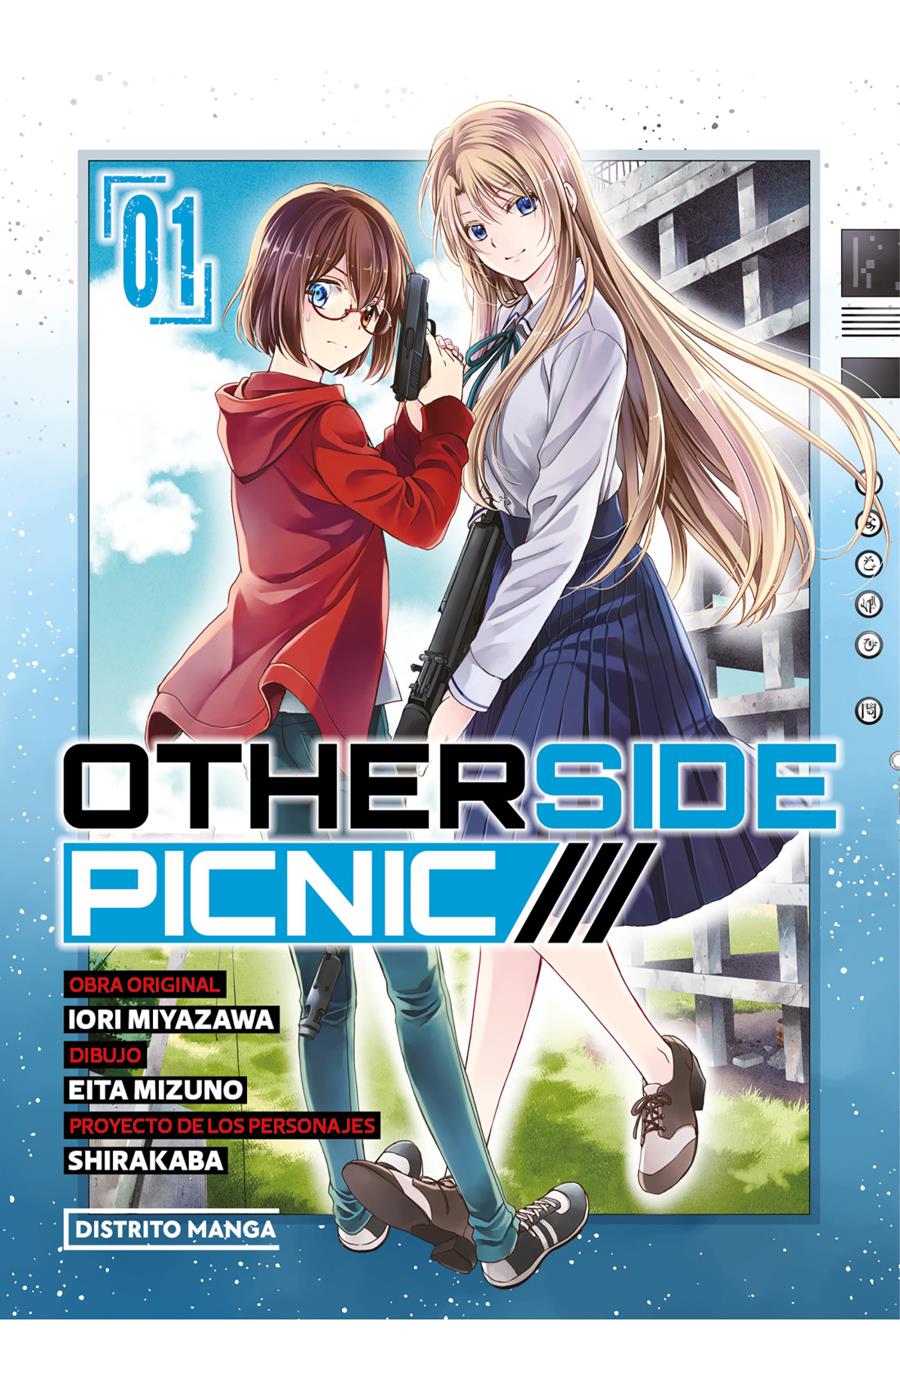 Otherside Picnic 1 | N0224-OTED15 | Iori Miyazawa, Eita Mizuno, Shirakaba | Terra de Còmic - Tu tienda de cómics online especializada en cómics, manga y merchandising